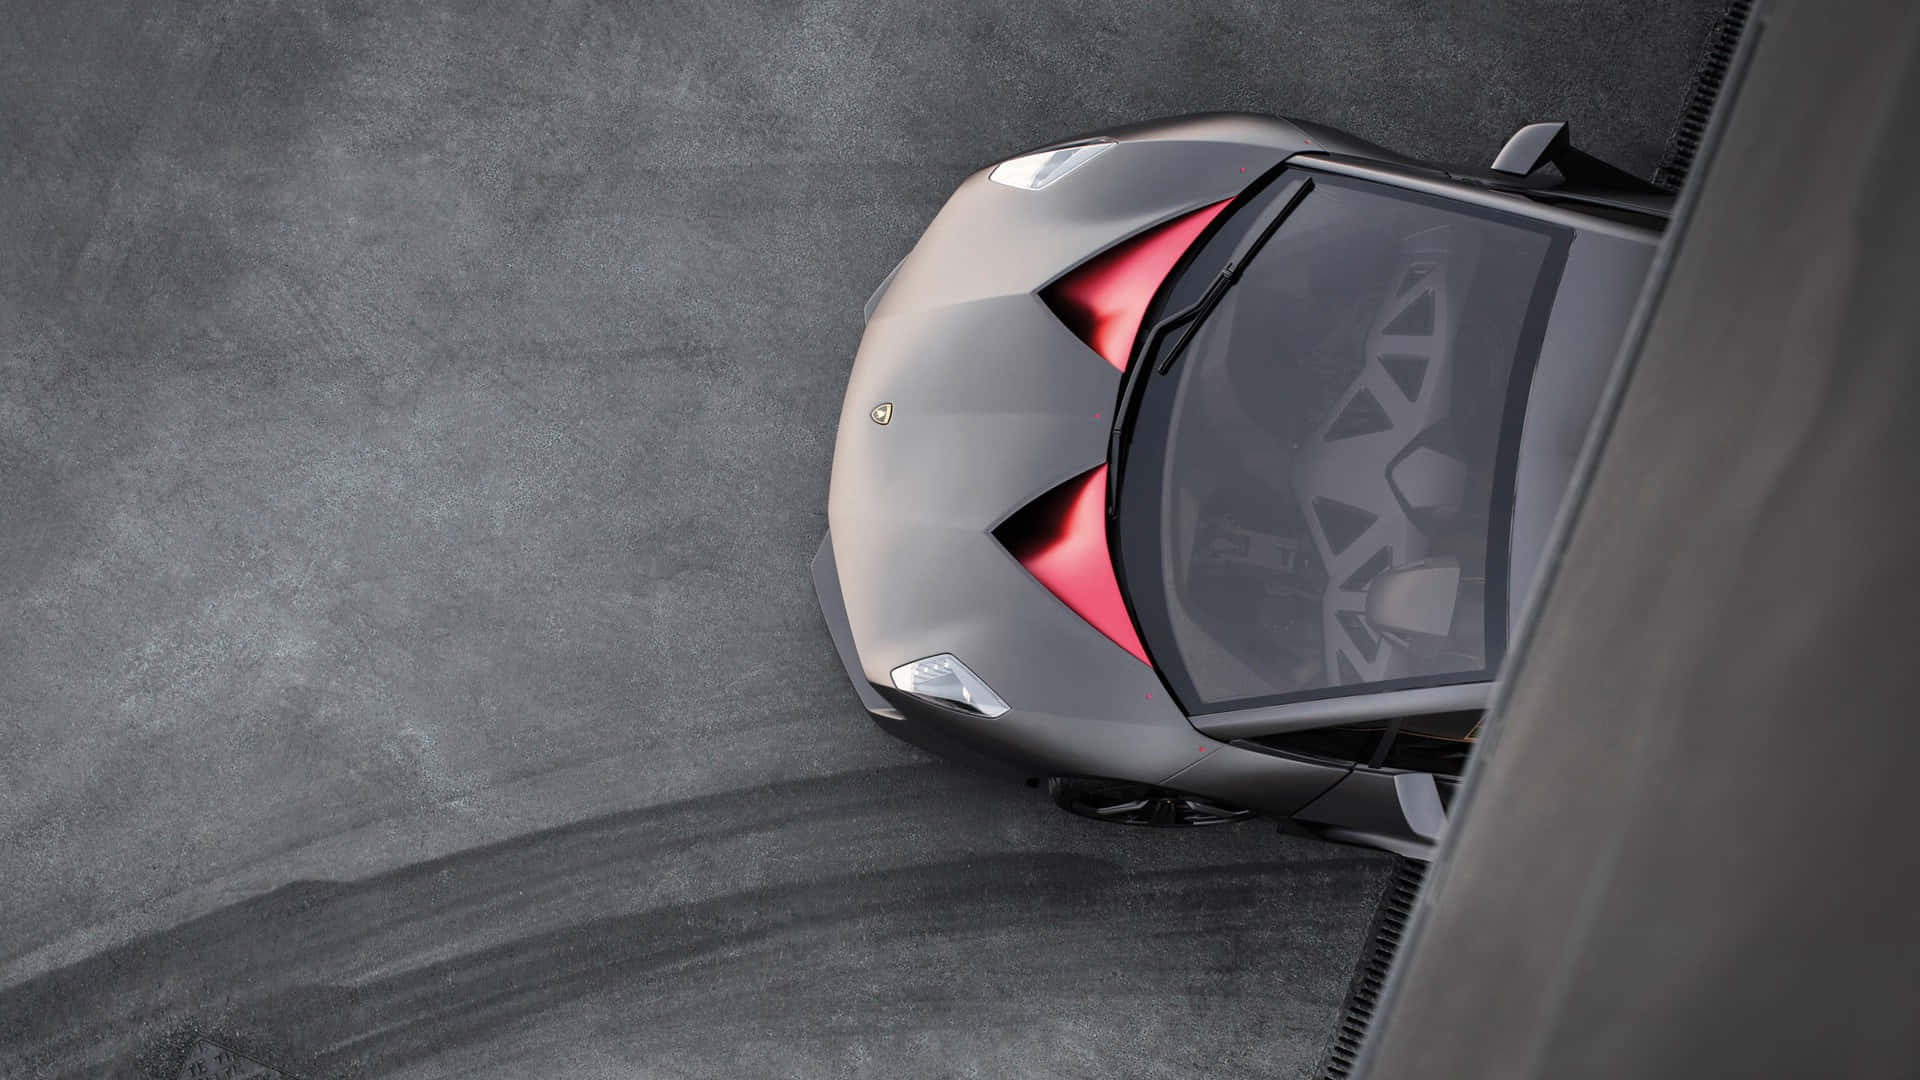 Caption: Lamborghini Sesto Elemento in Full Speed Wallpaper